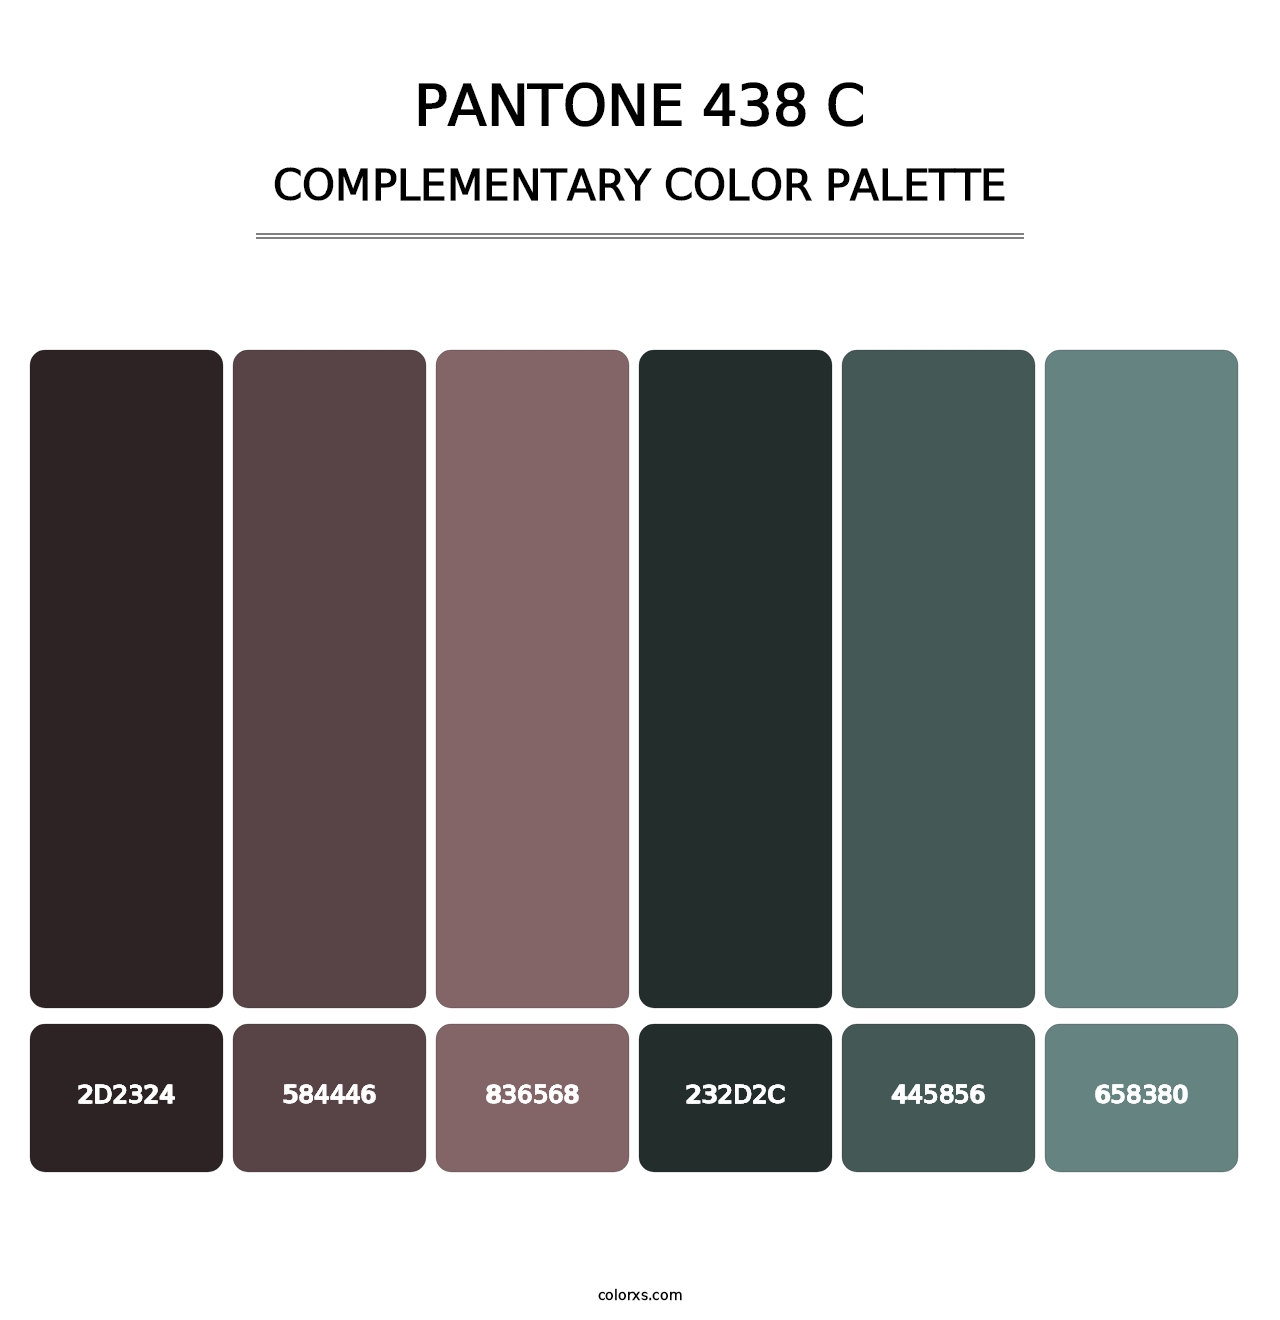 PANTONE 438 C - Complementary Color Palette